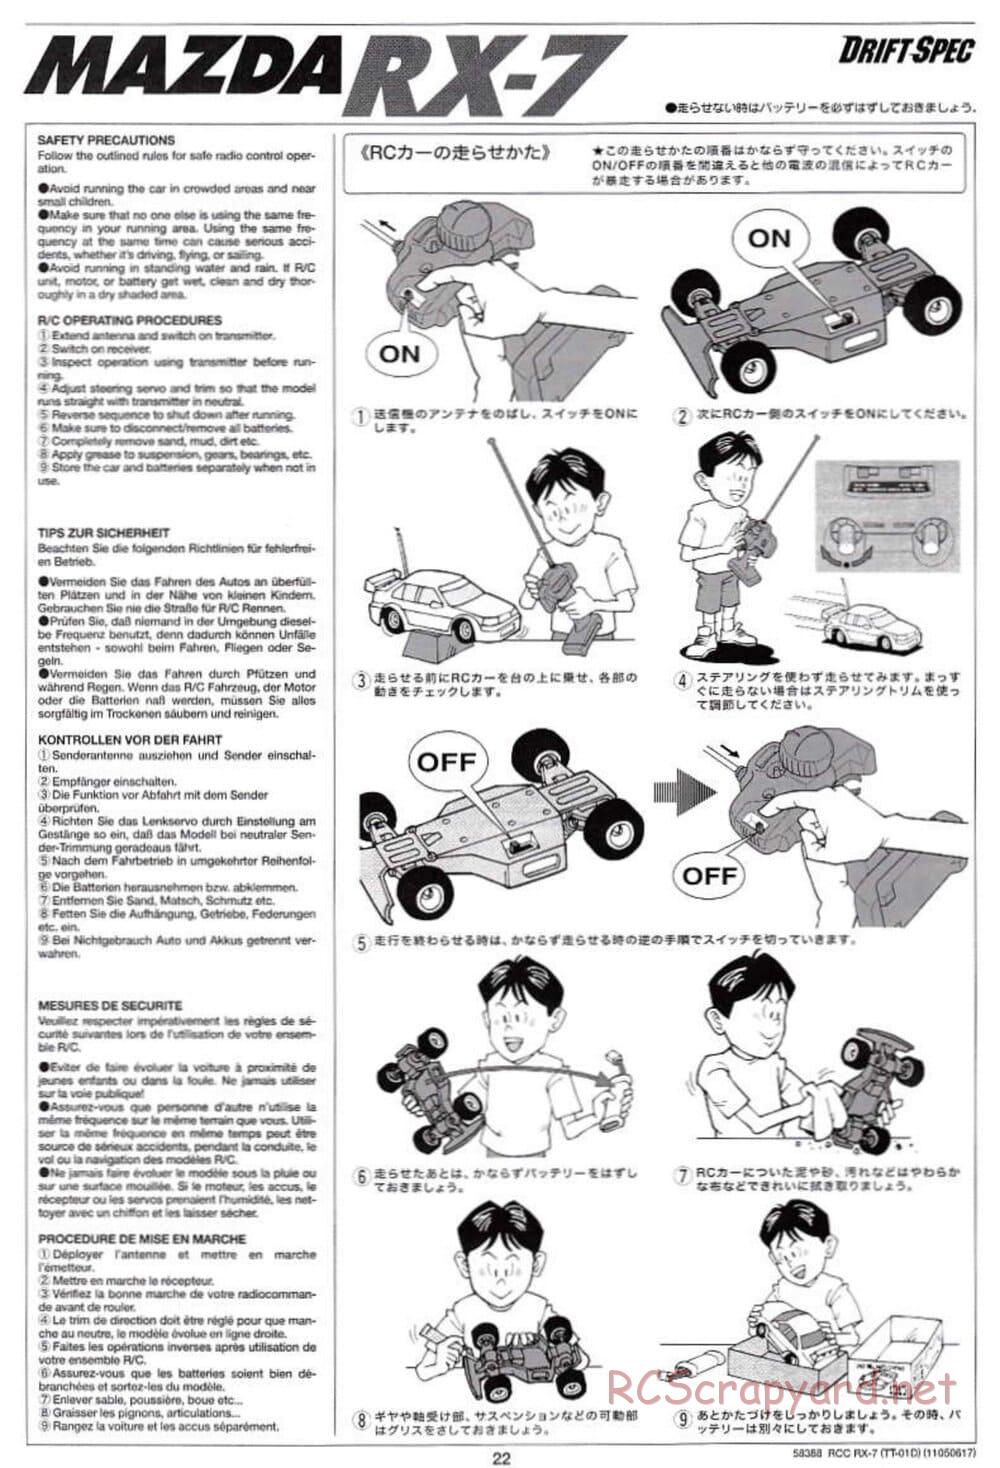 Tamiya - Mazda RX-7 - Drift Spec - TT-01D Chassis - Manual - Page 22